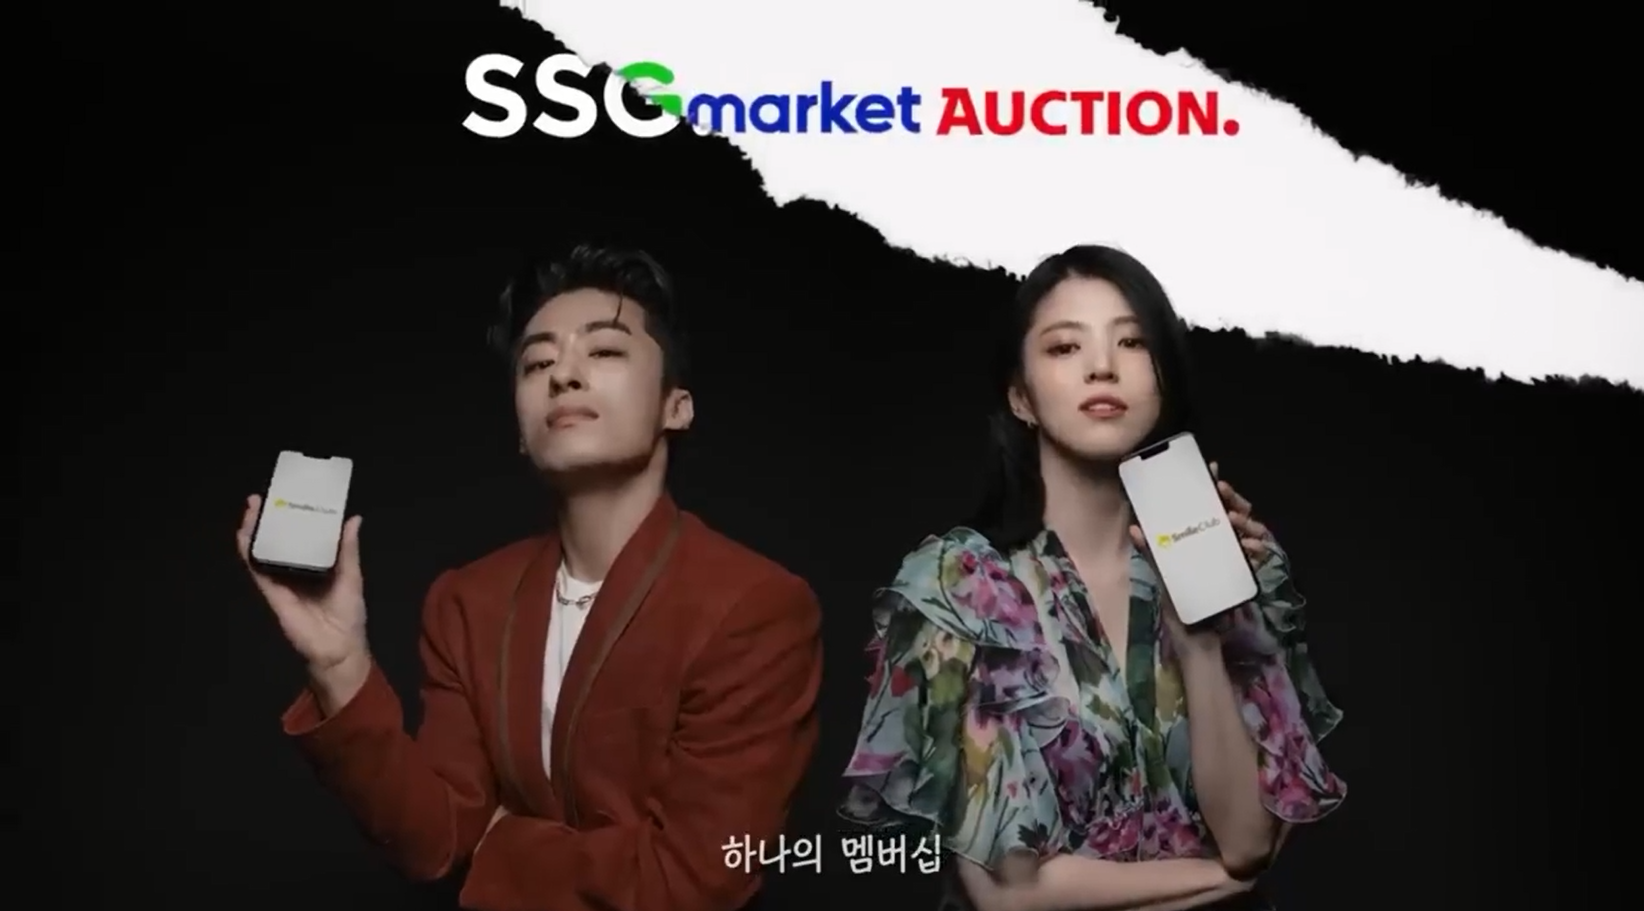 韩国Gmarket&Auction平台宣传片